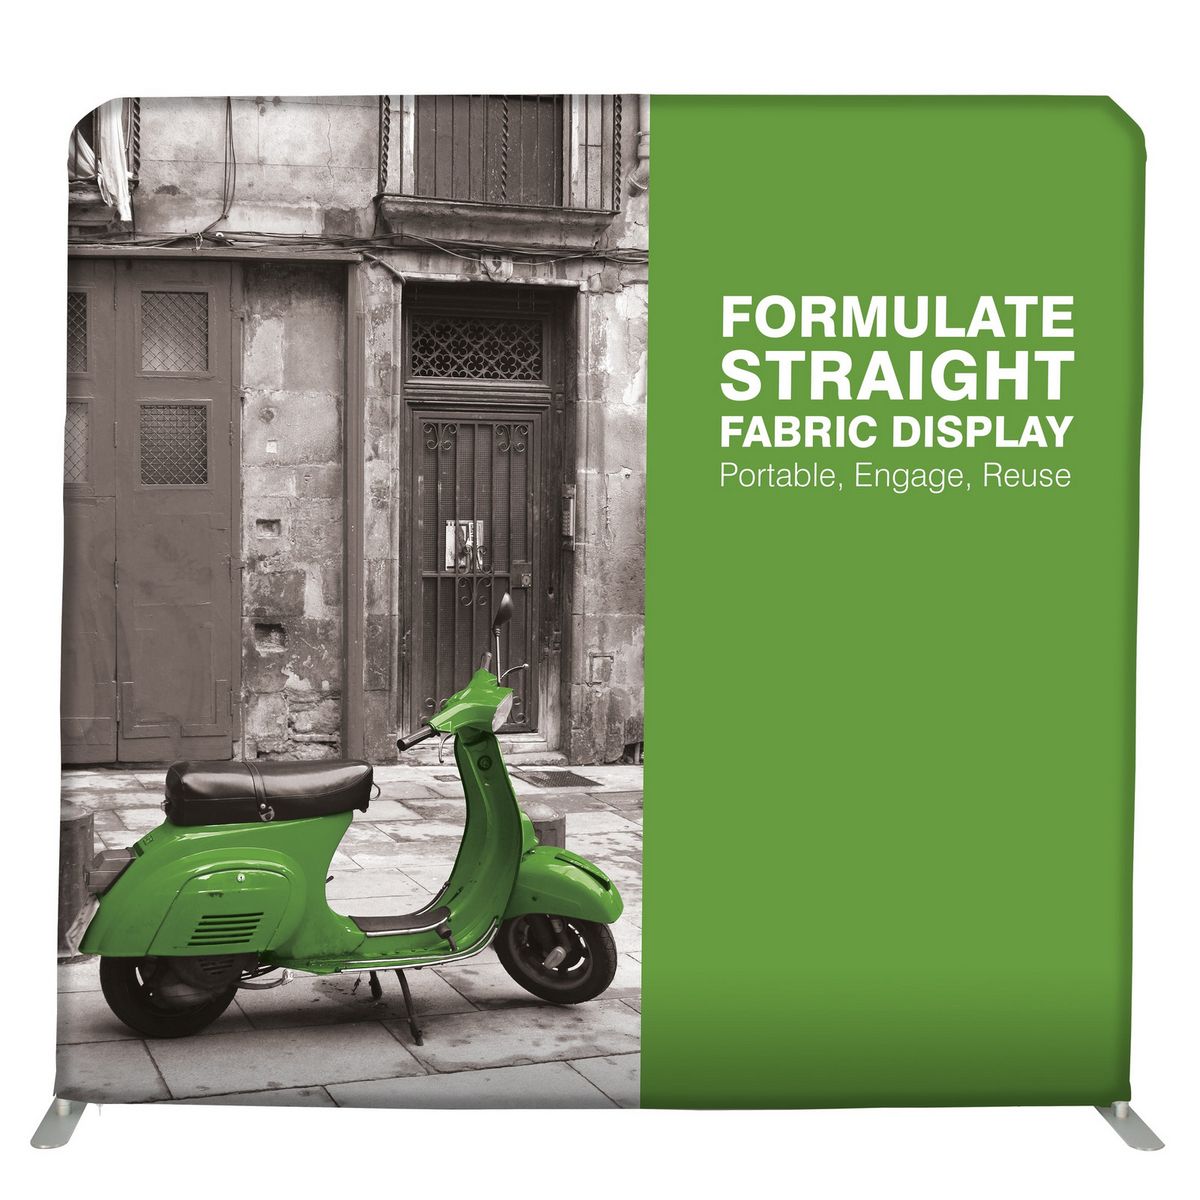 Formulate Straight Fabric Display HR.jpg